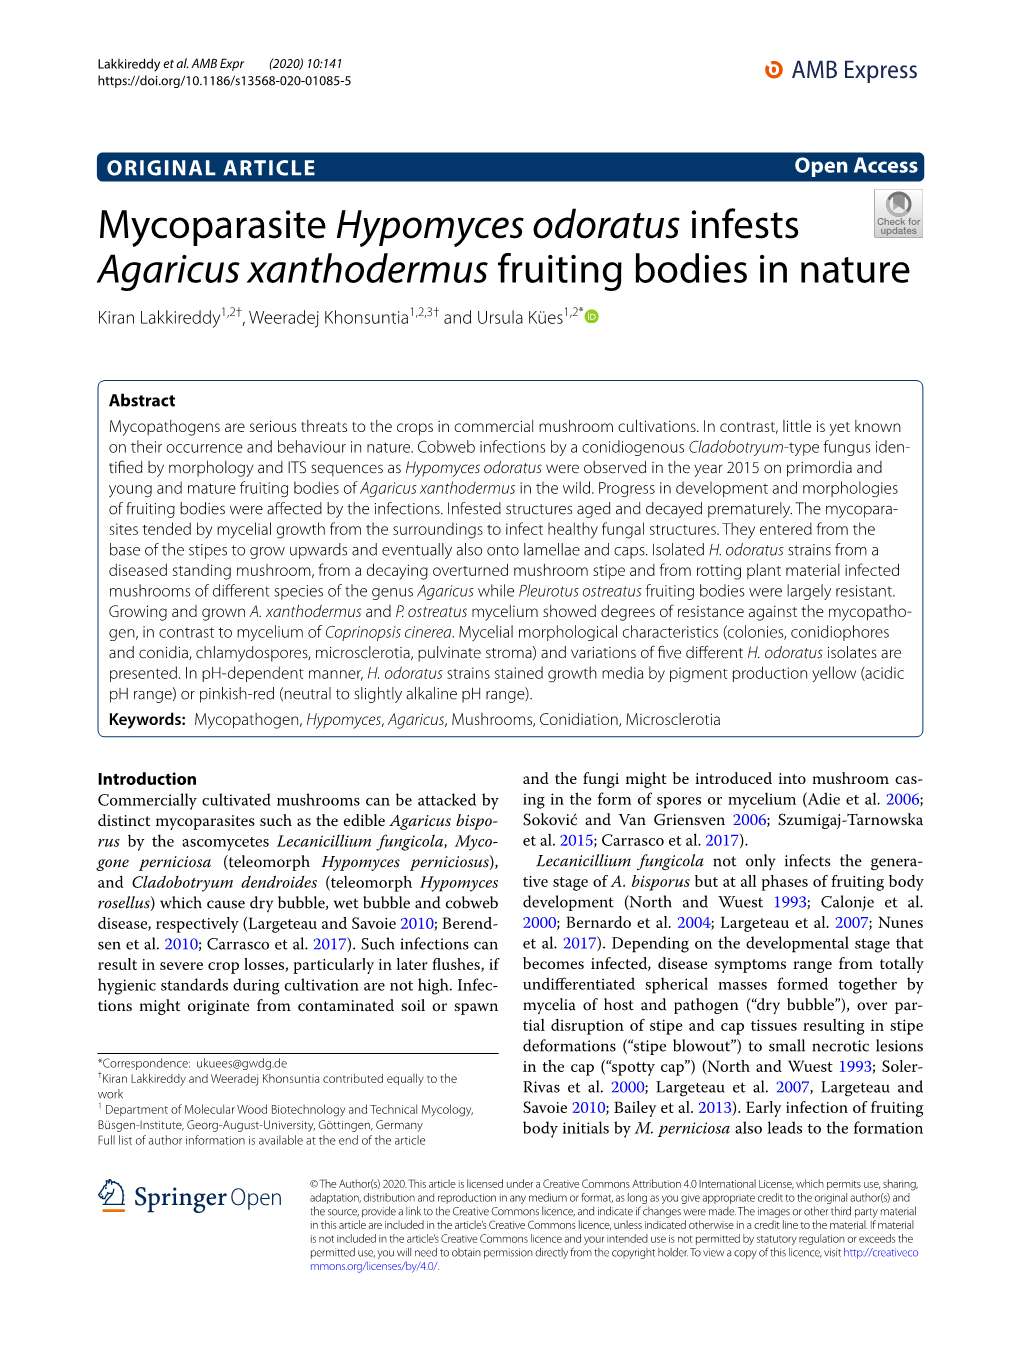 Mycoparasite Hypomyces Odoratus Infests Agaricus Xanthodermus Fruiting Bodies in Nature Kiran Lakkireddy1,2†, Weeradej Khonsuntia1,2,3† and Ursula Kües1,2*